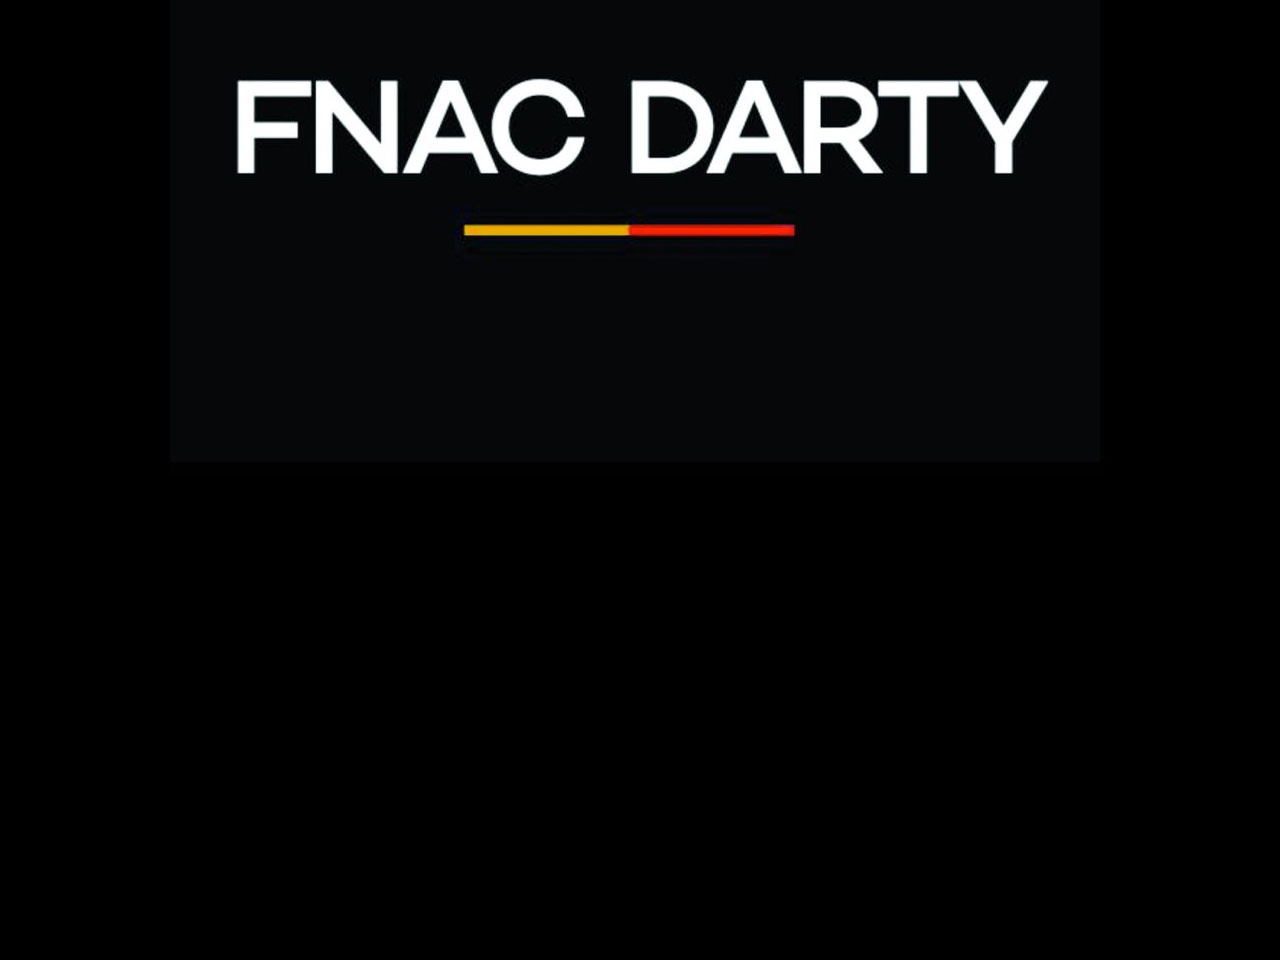 FNAC DARTY présente le projet d’organisation de son siège